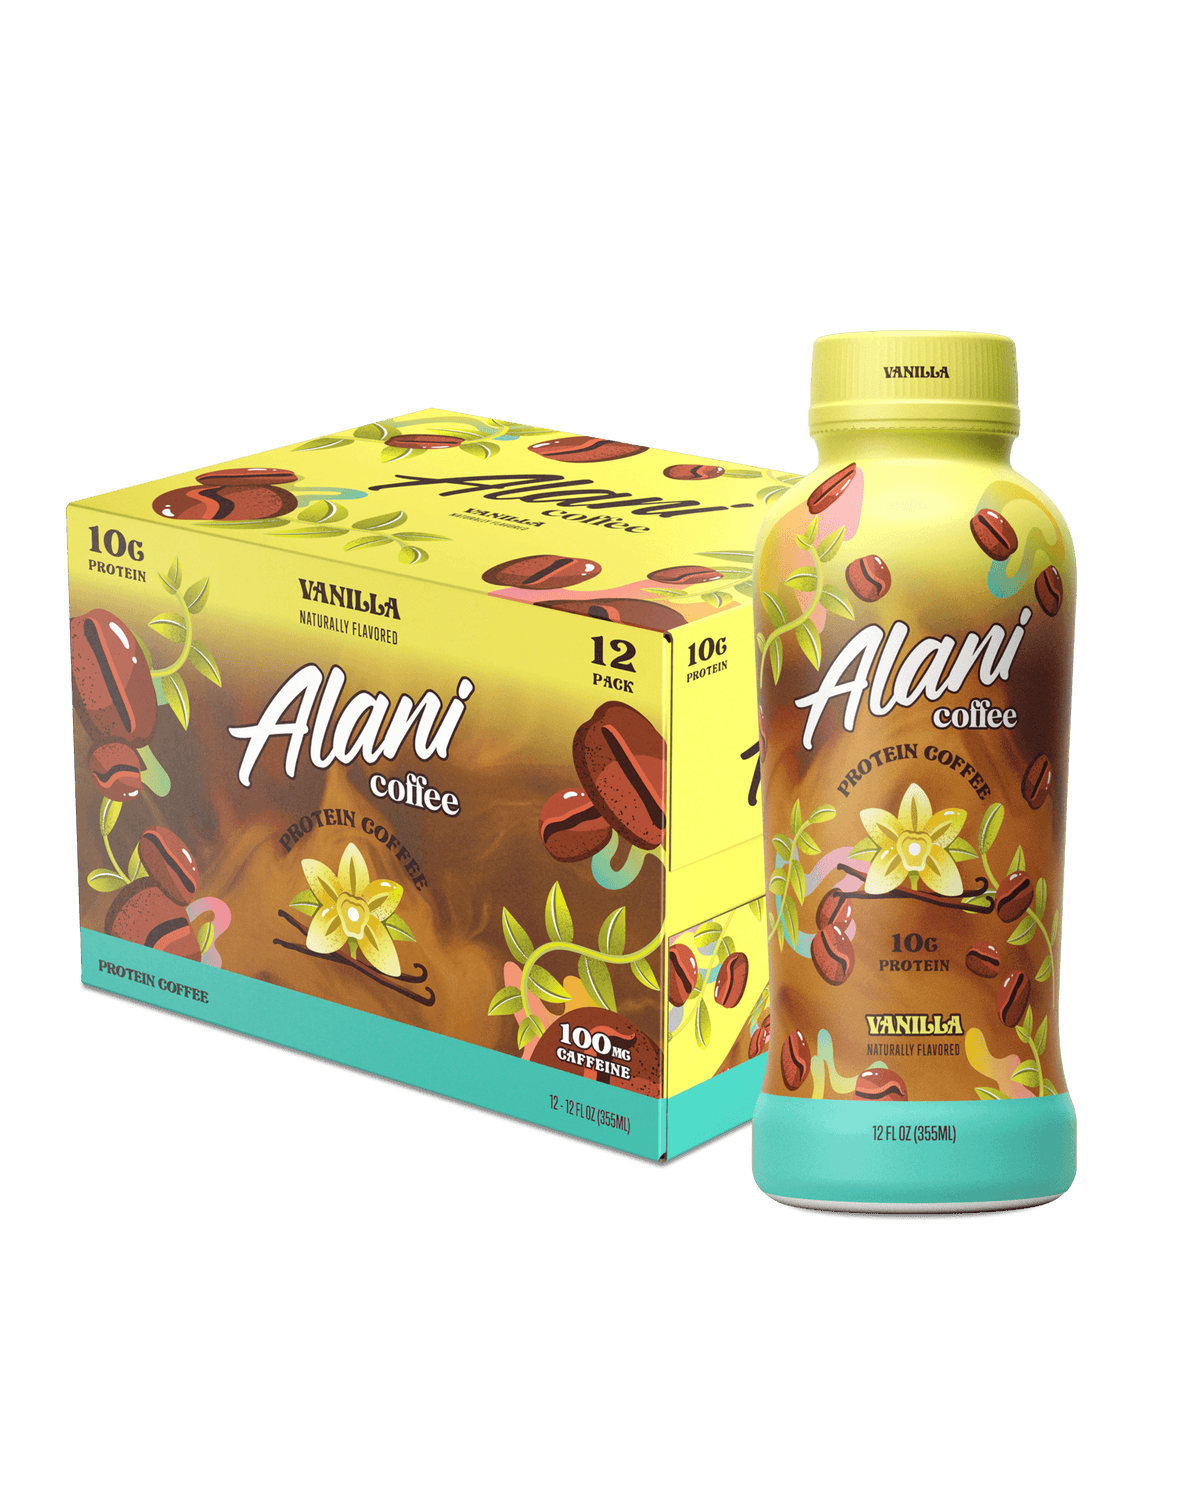 A bottle of Alani Nu Vanilla Coffee sitting next to a 12pk box of Alani Nu Vanila Coffee.